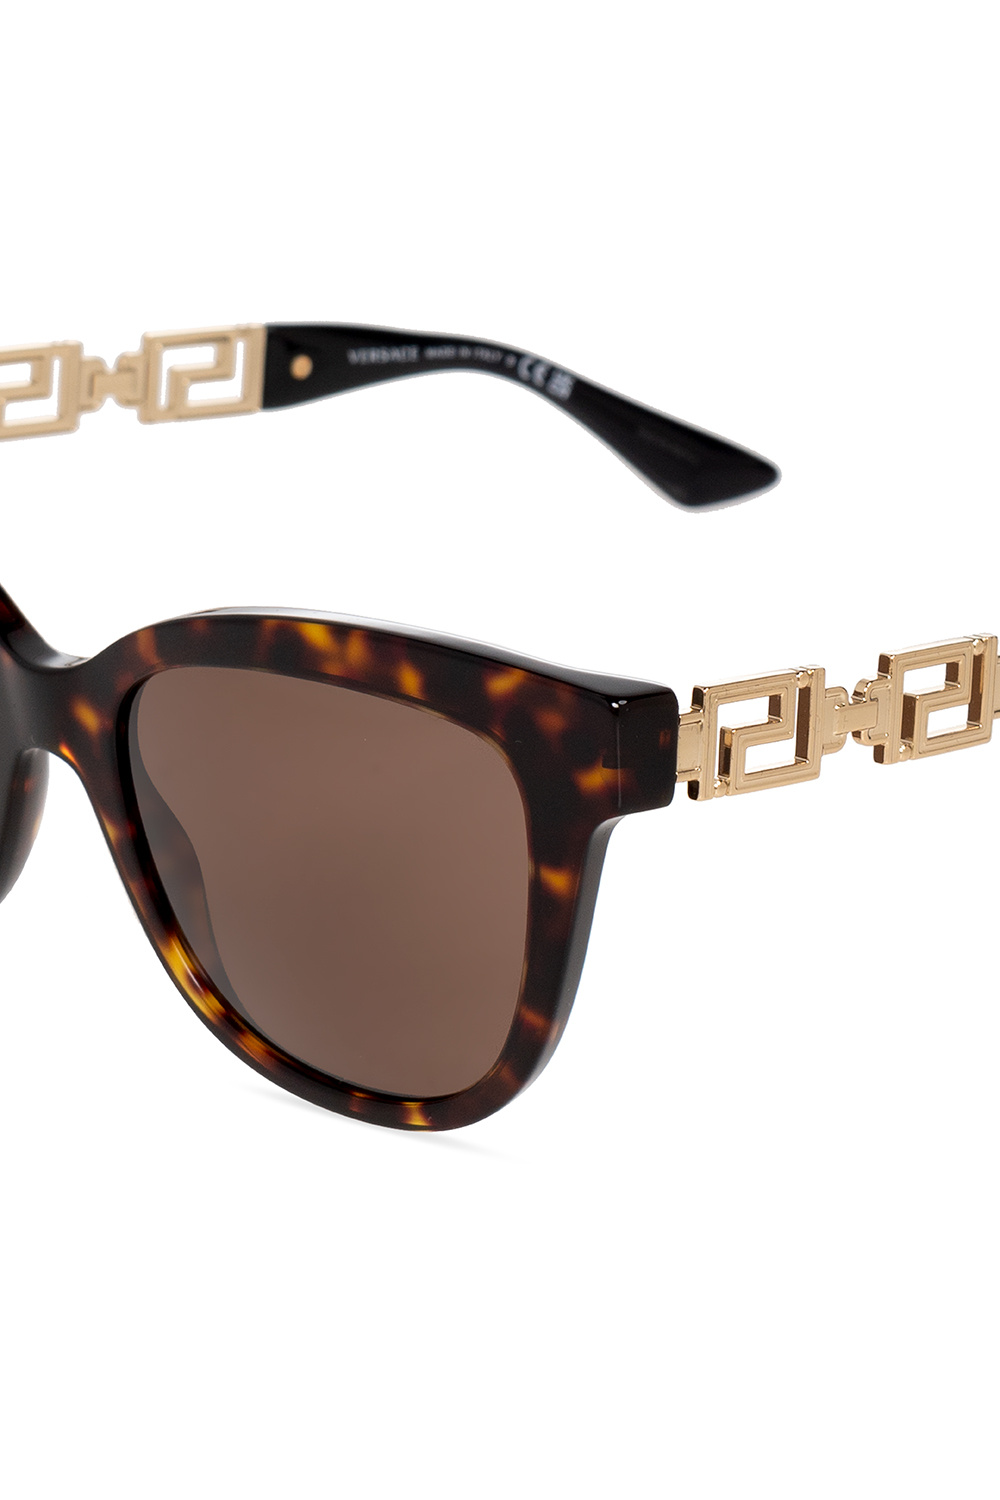 Versace Greca Crella sunglasses